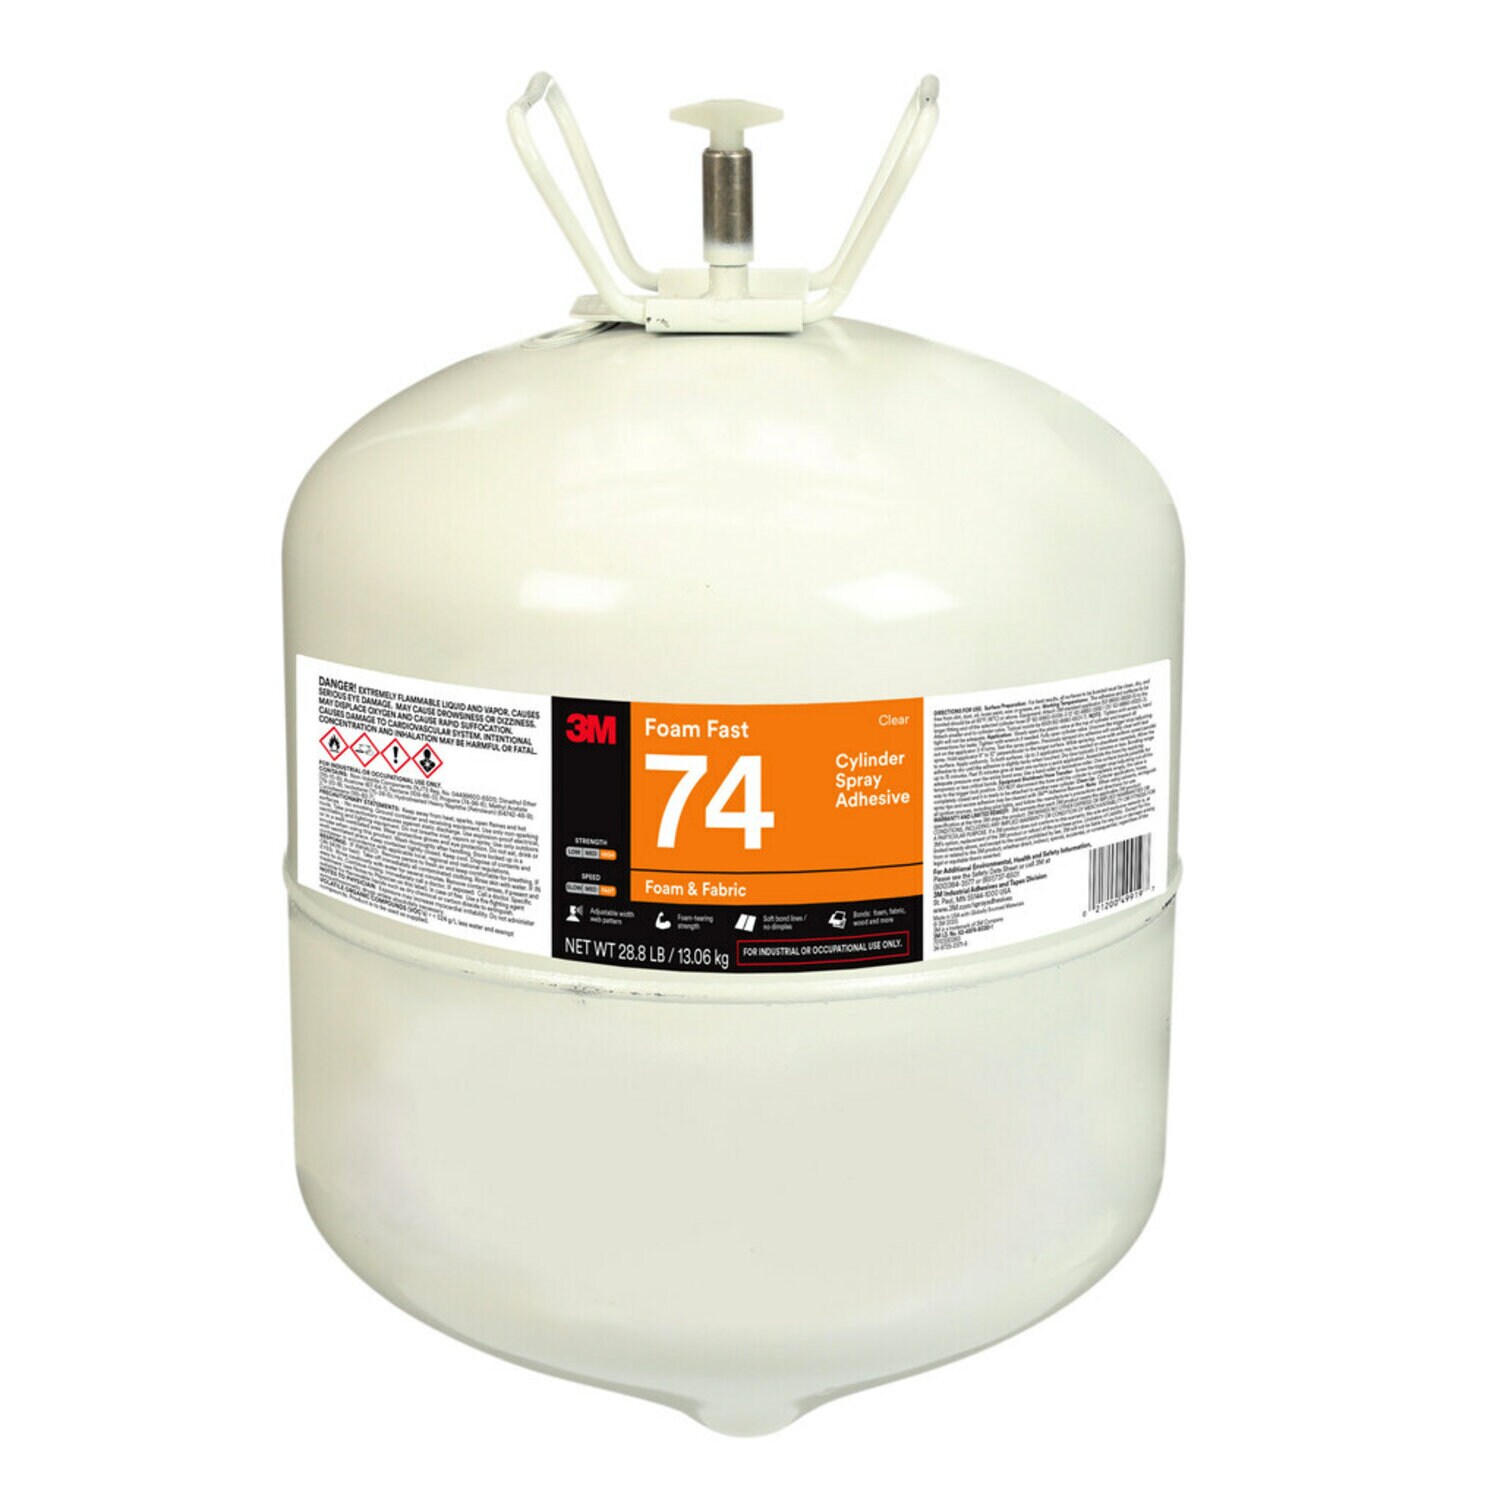 7010330393 - 3M Foam Fast 74 Cylinder Spray Adhesive, Clear, Large Cylinder (Net Wt
28.8 lb), 1/case